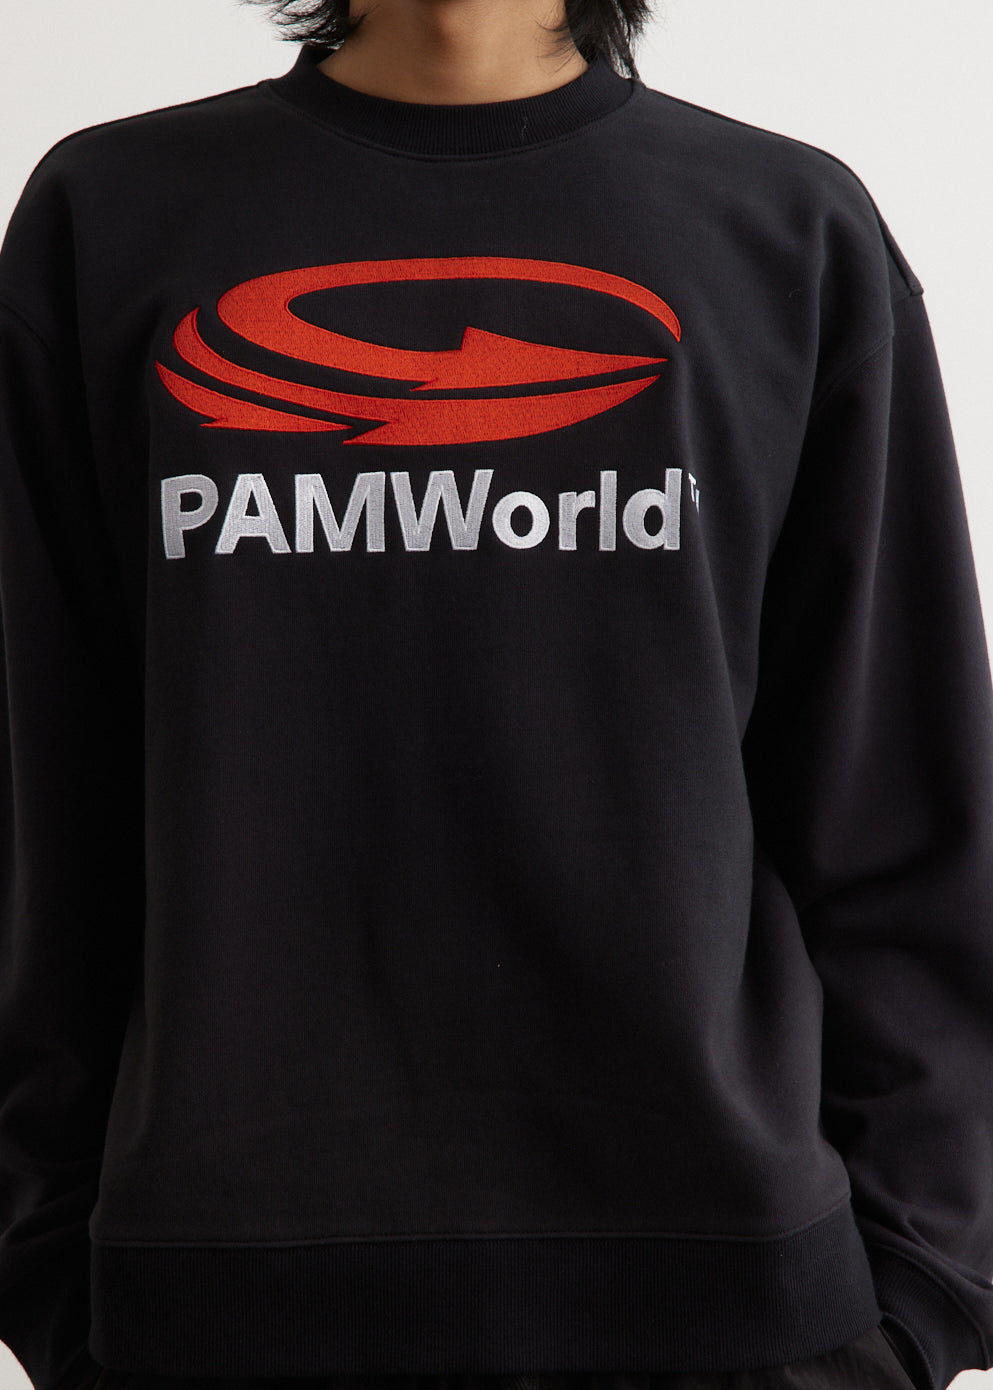 P.A.M. World 2.0 Crewneck